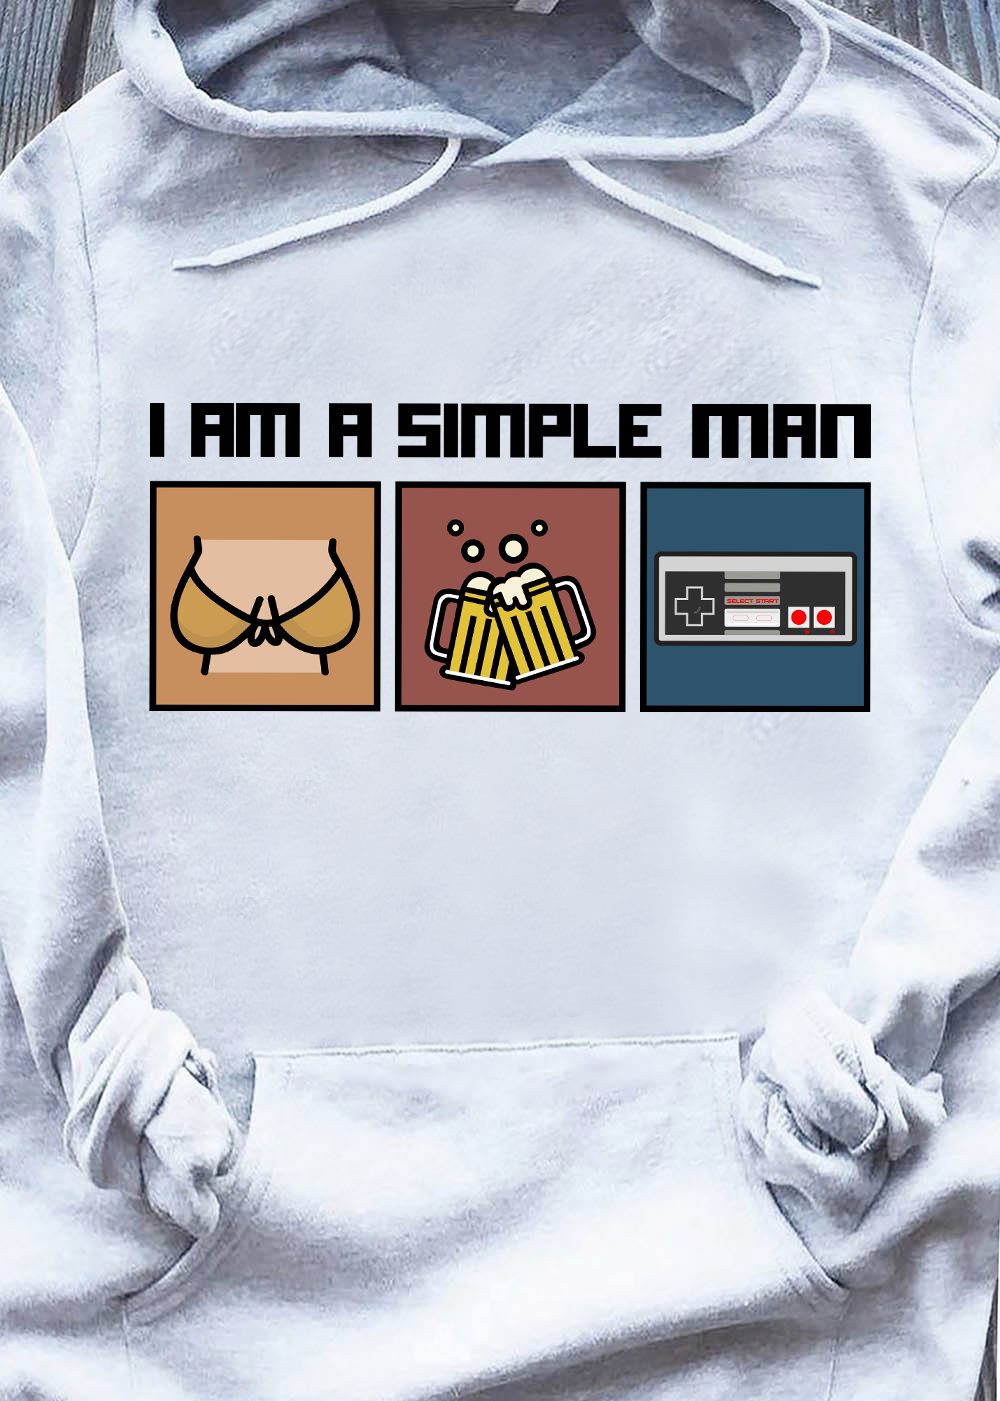 I am a simple man